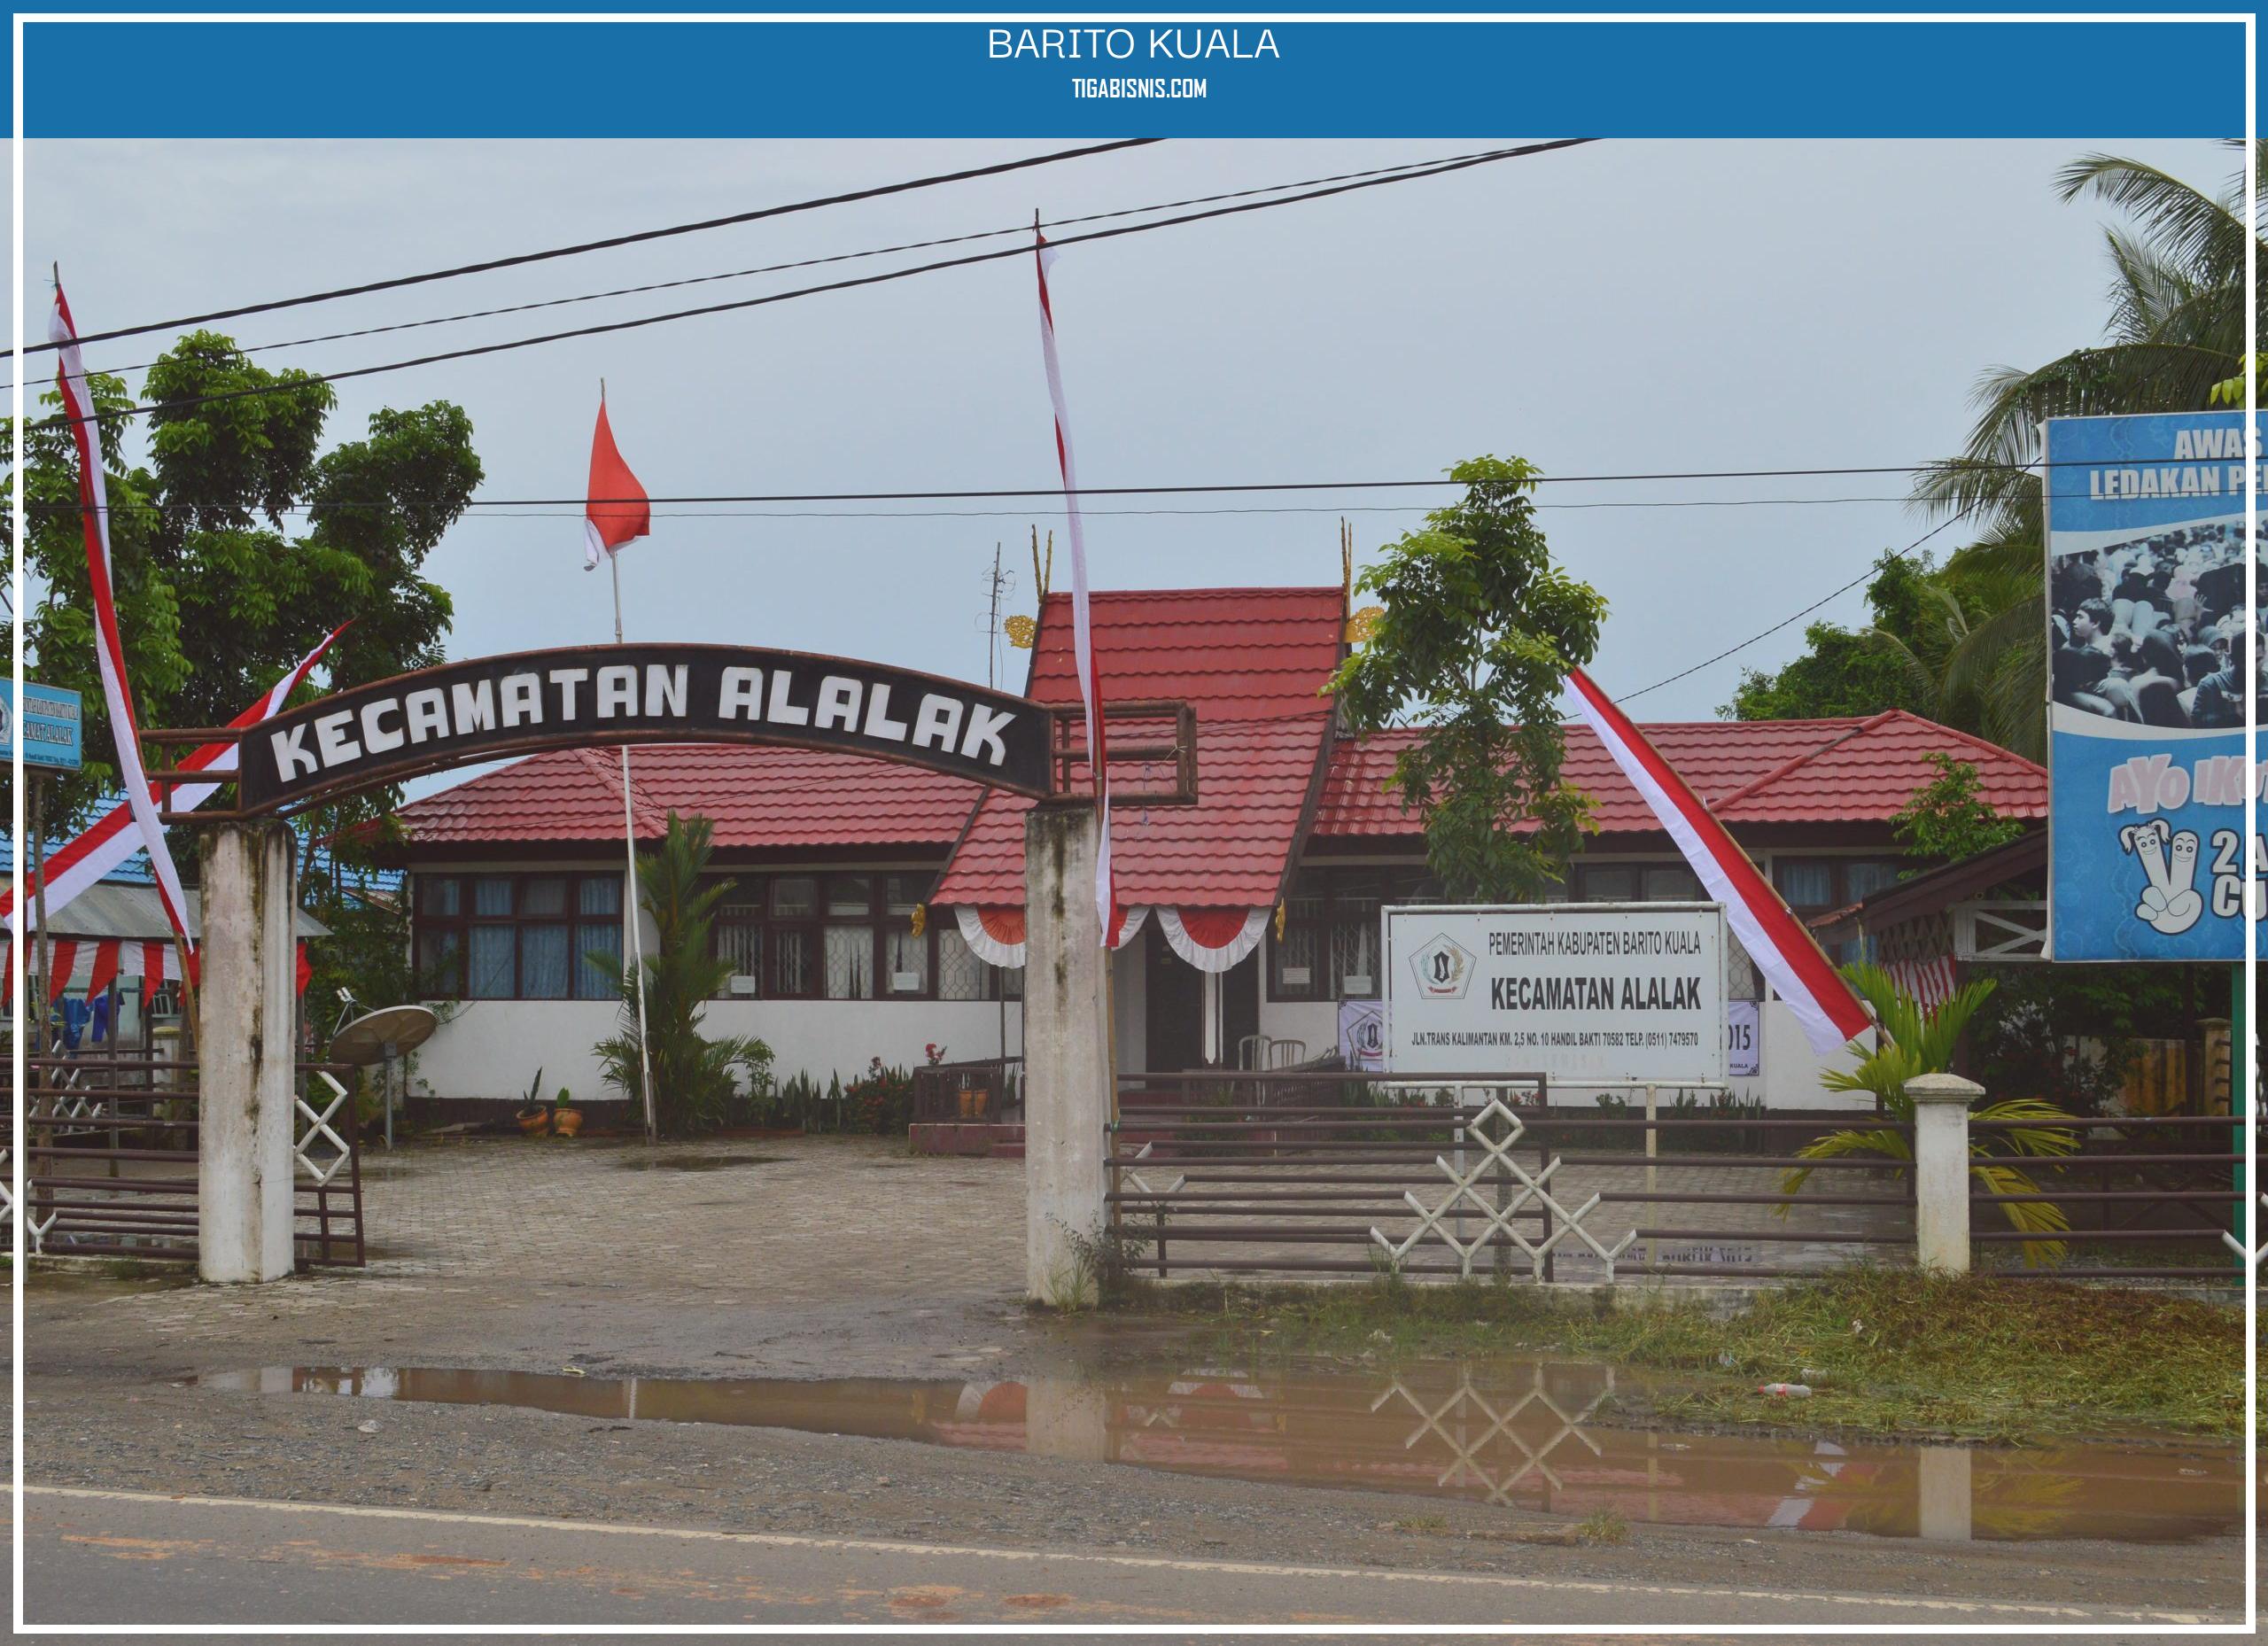 Kesempatan Kerja Untuk area Barito Kuala . Sumber : Https://commons.wikimedia.org/wiki/file:kantor_kecamatan_alalak,_barito_kuala.jpg